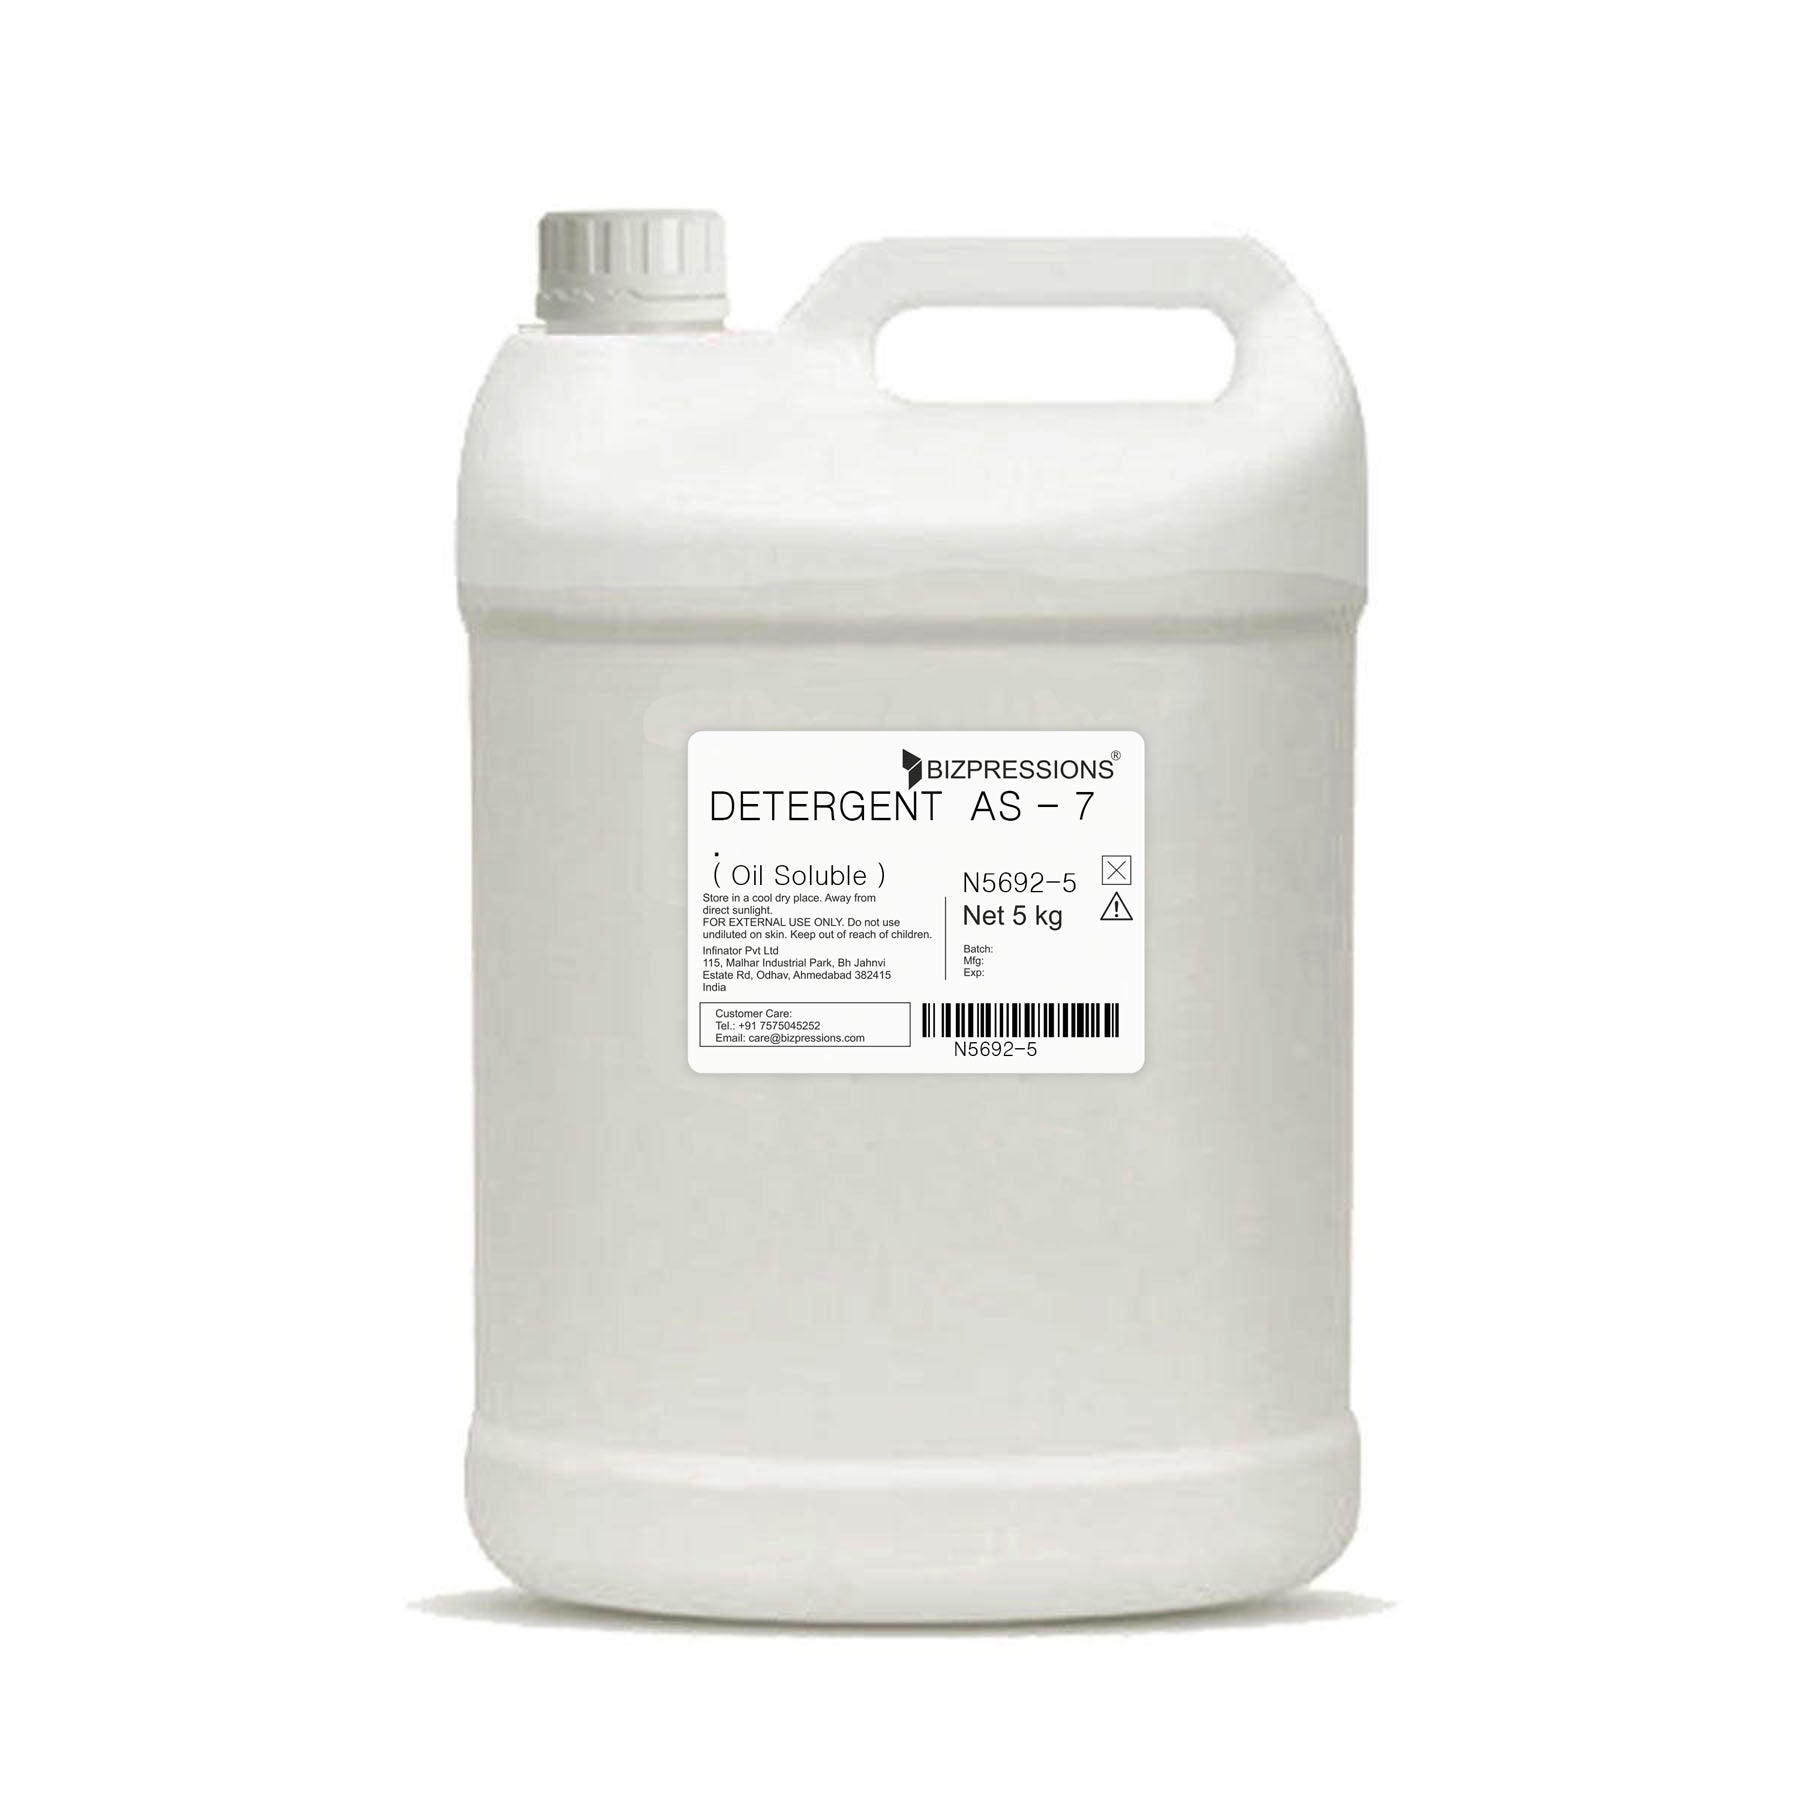 DETERGENT AS - 7 - Fragrance ( Oil Soluble ) - 5 kg